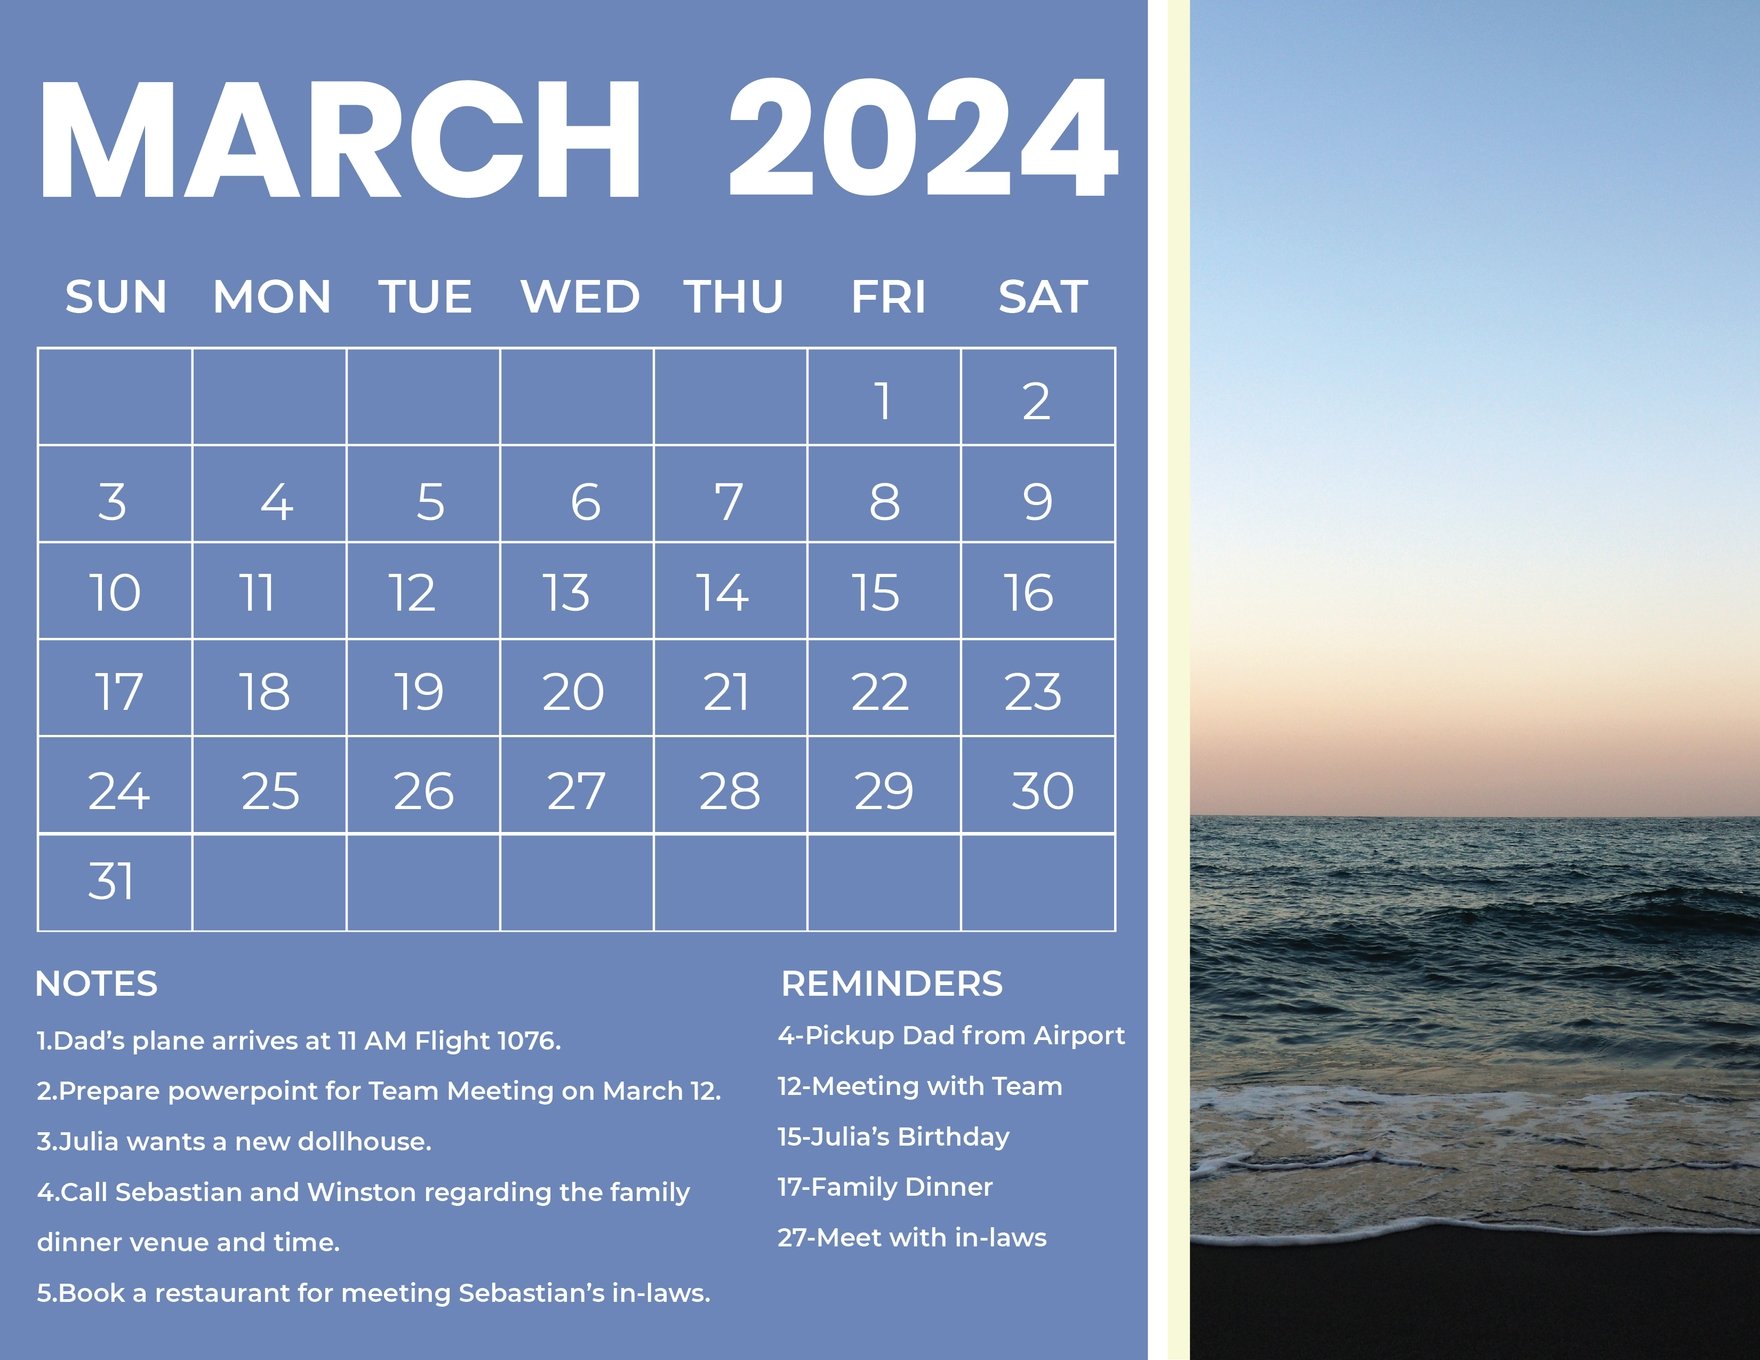 March 2024 Photo Calendar in Word, Illustrator, EPS, SVG, JPG